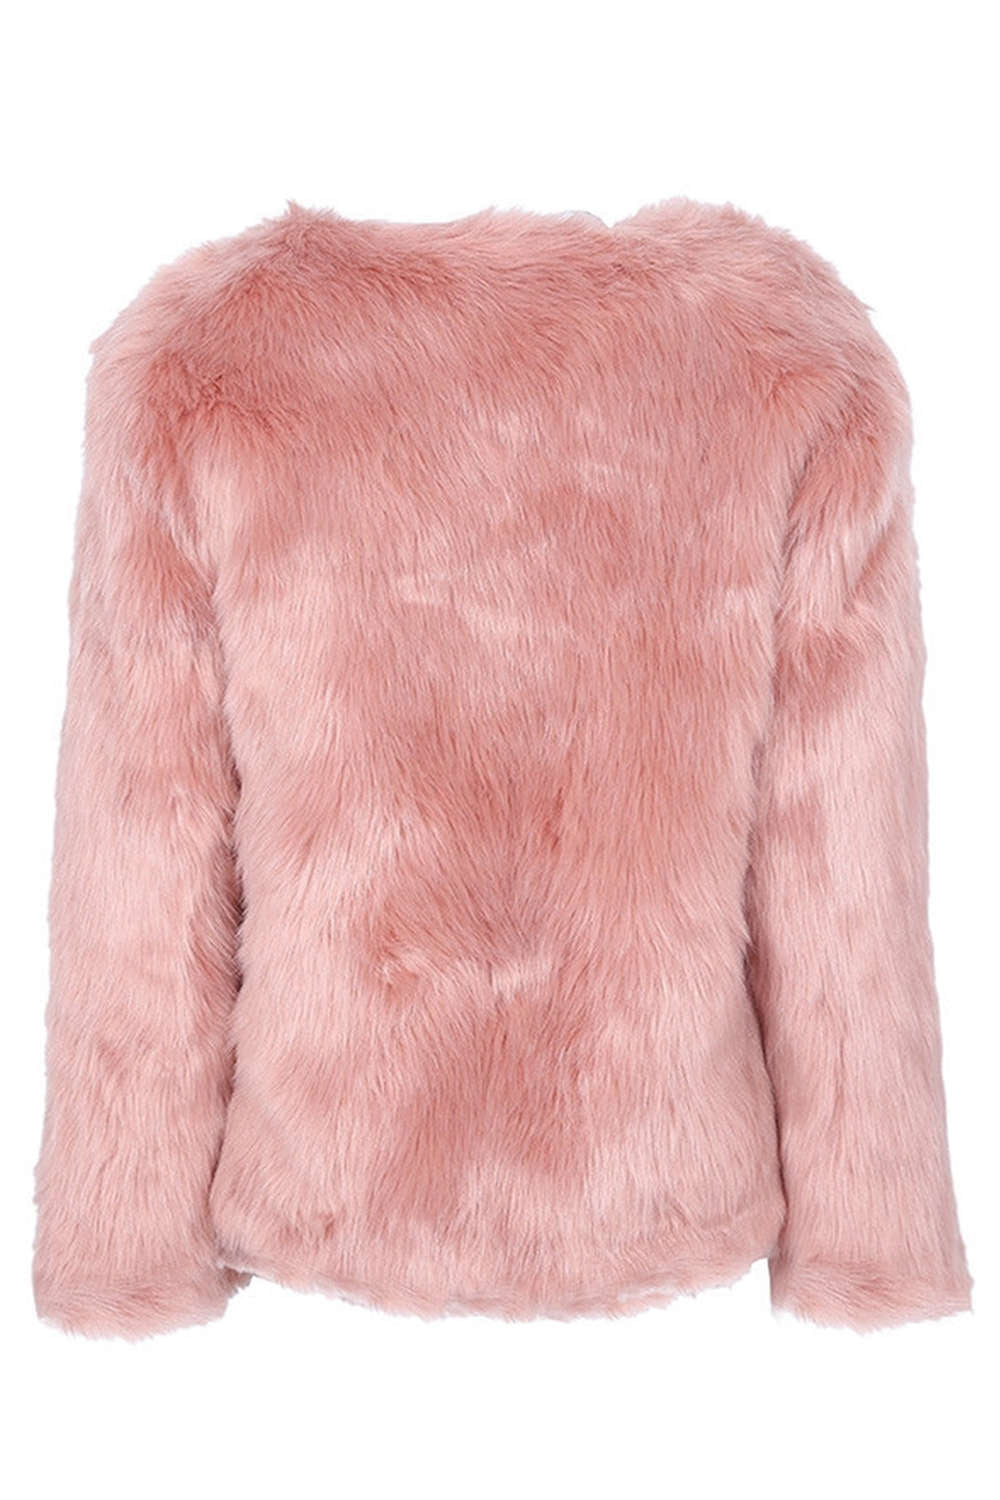 ﻿﻿Iyasson Women's Faux Fur Short Coat